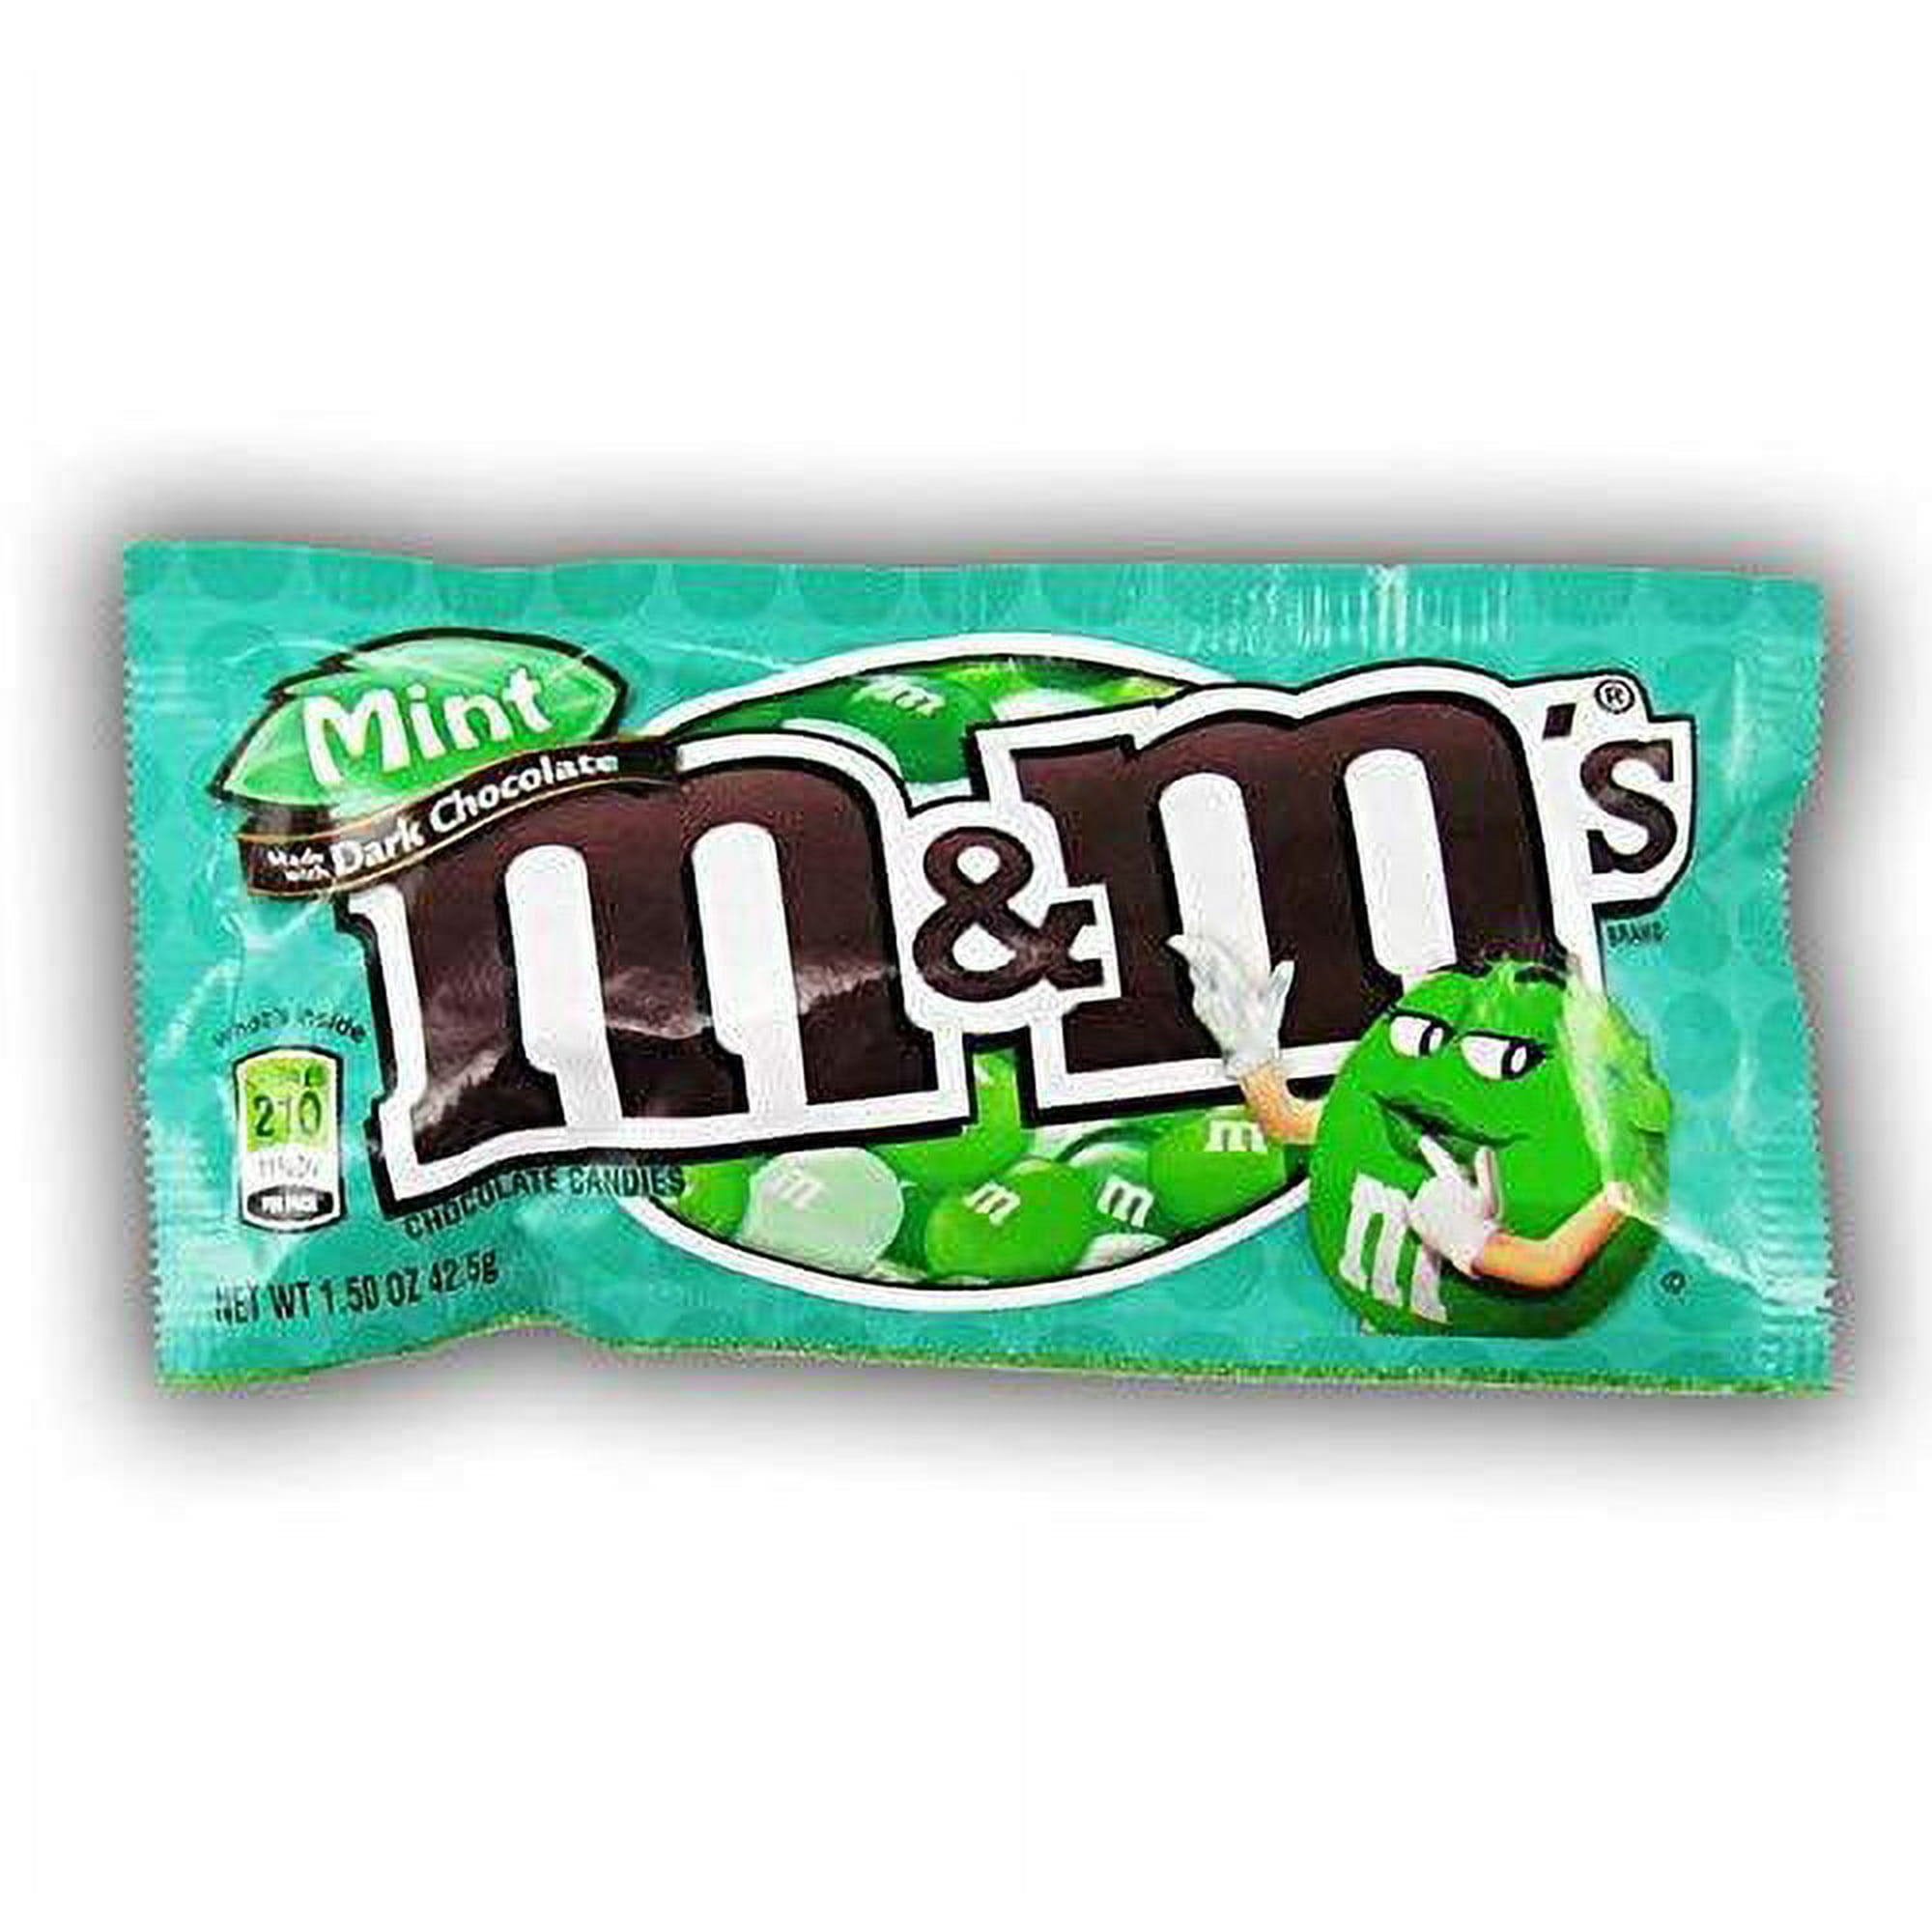 m&m dark chocolate mint